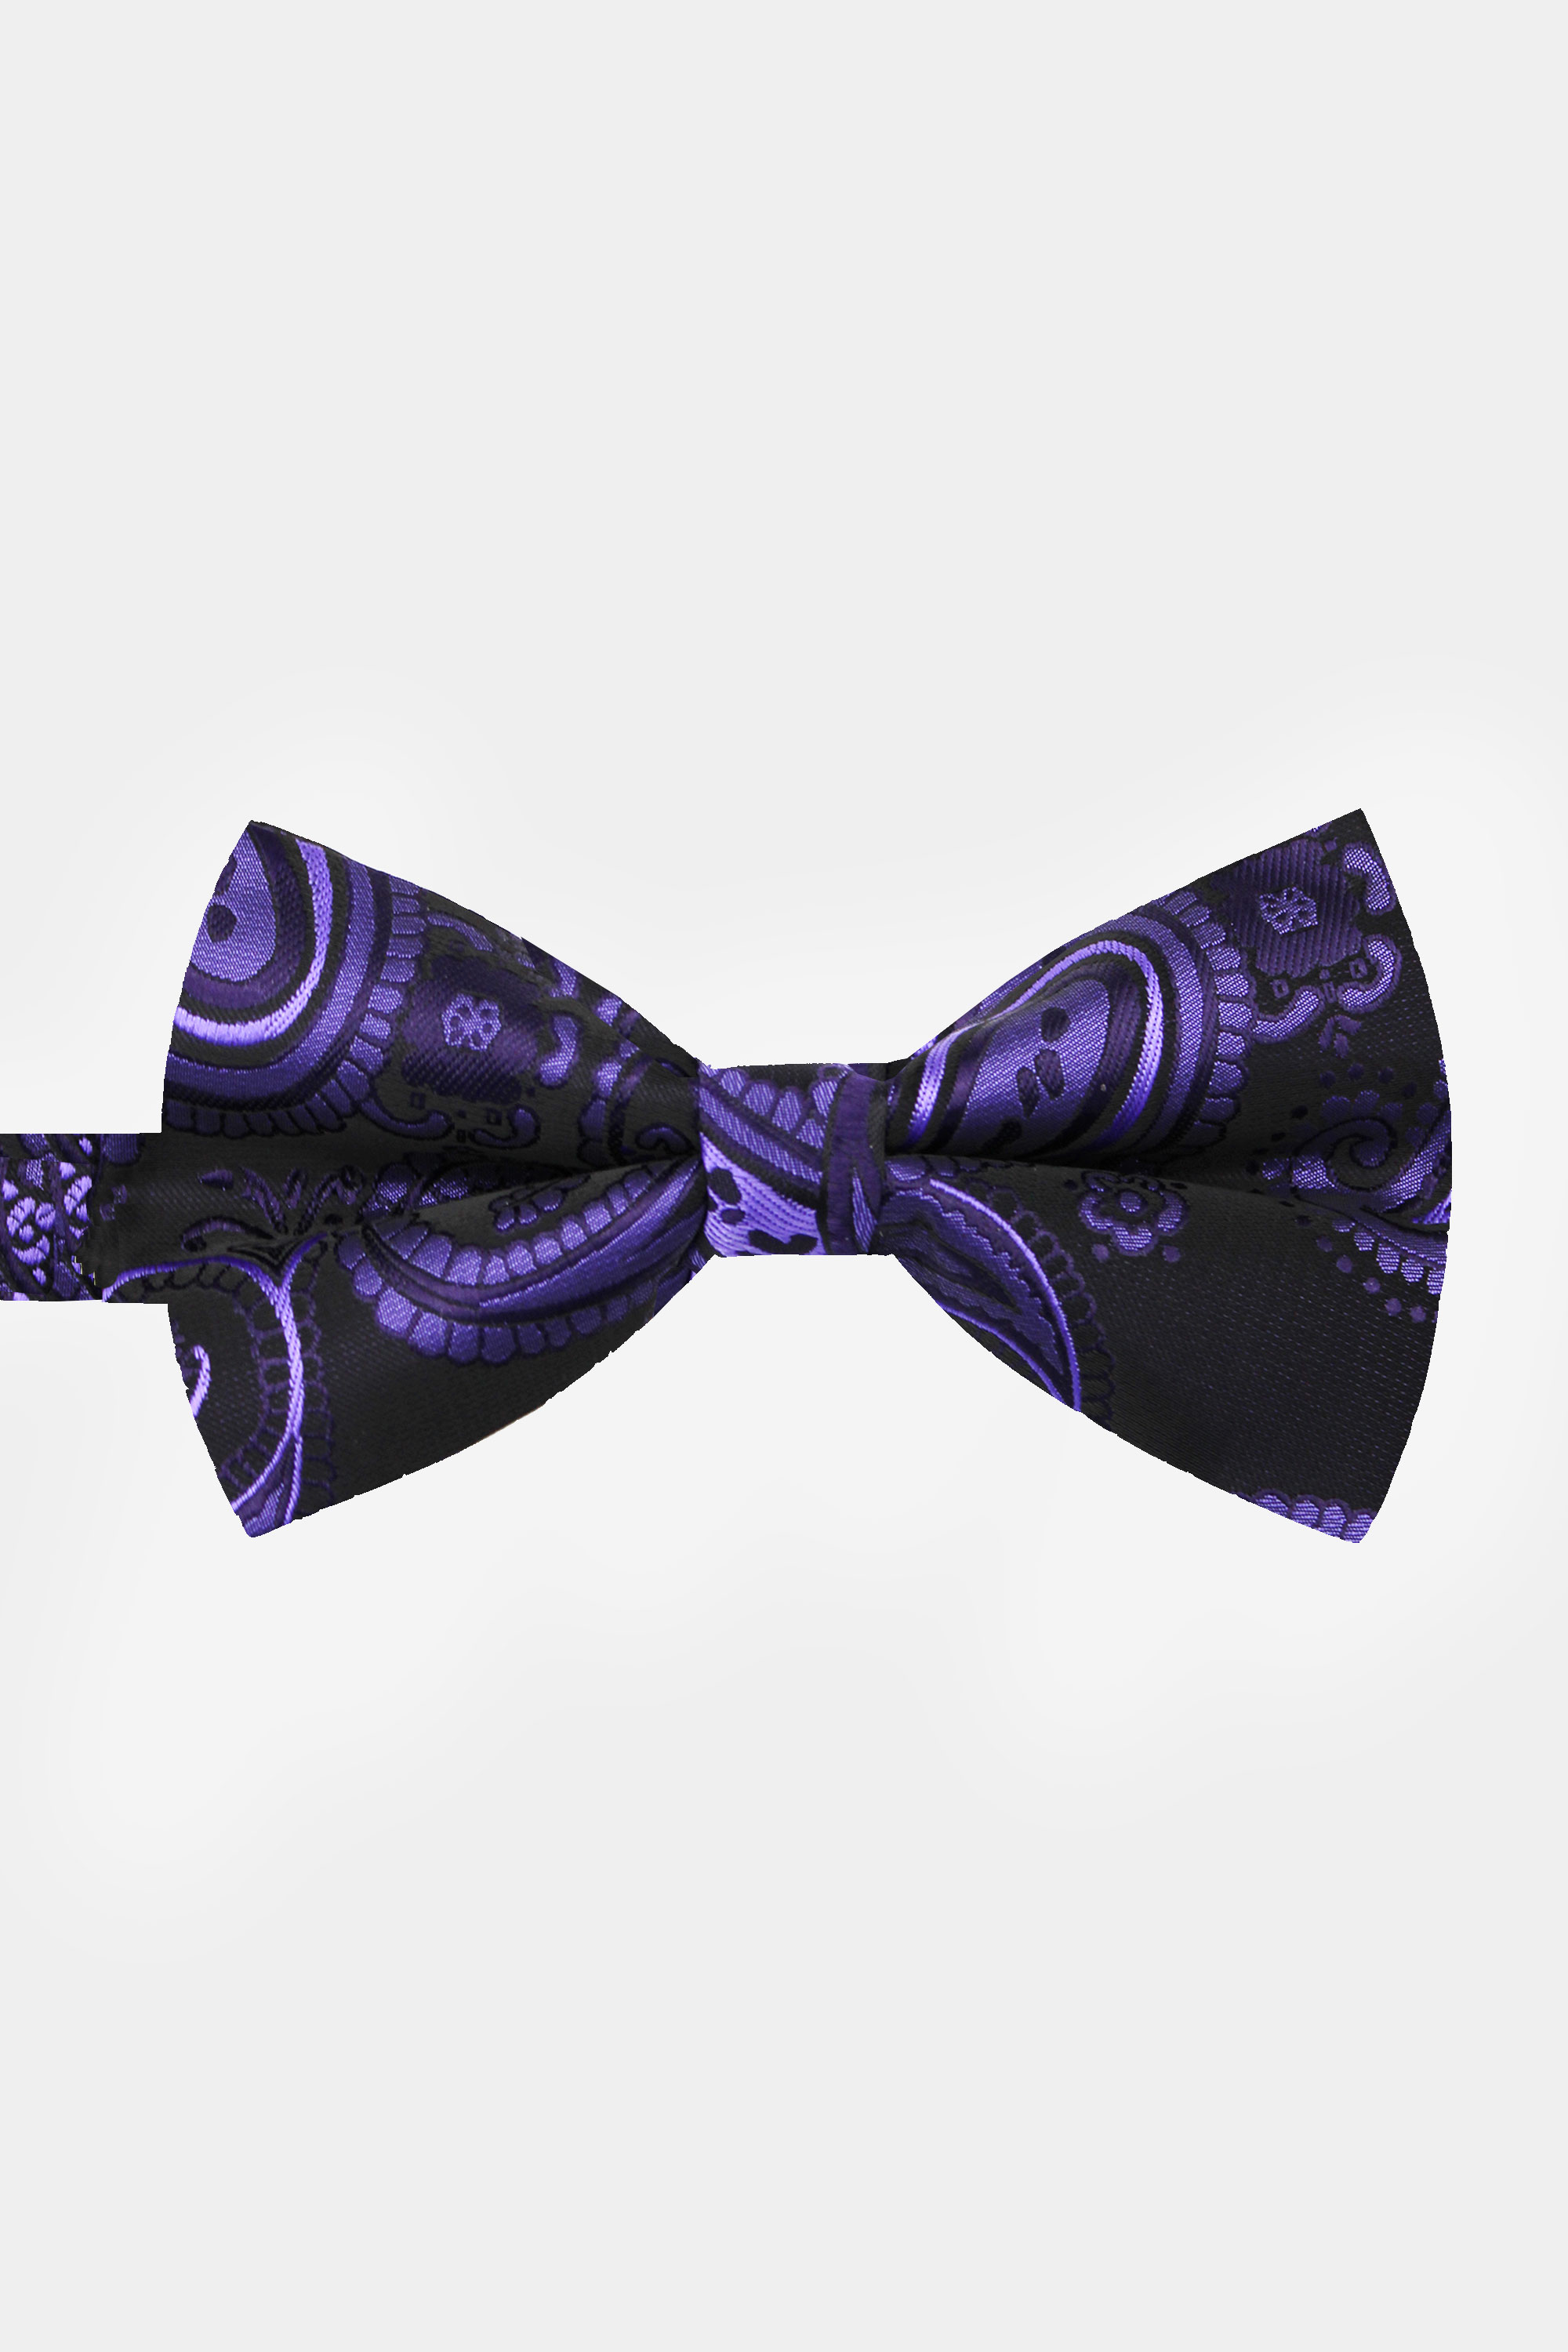 Purple-Paisley-Bow-Tie-from-Gentlemansguru.com